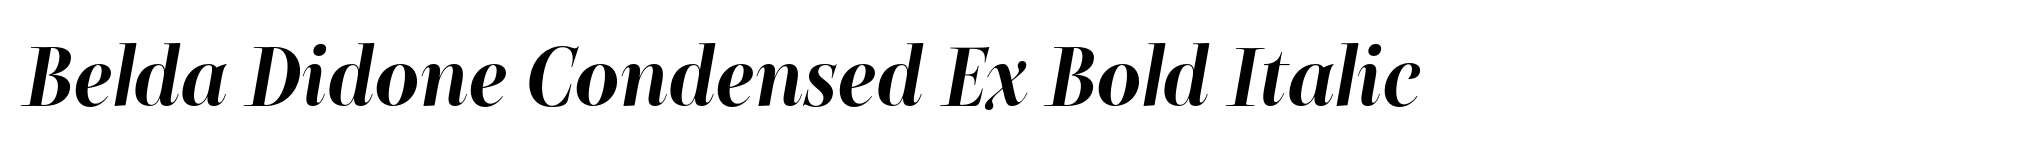 Belda Didone Condensed Ex Bold Italic image